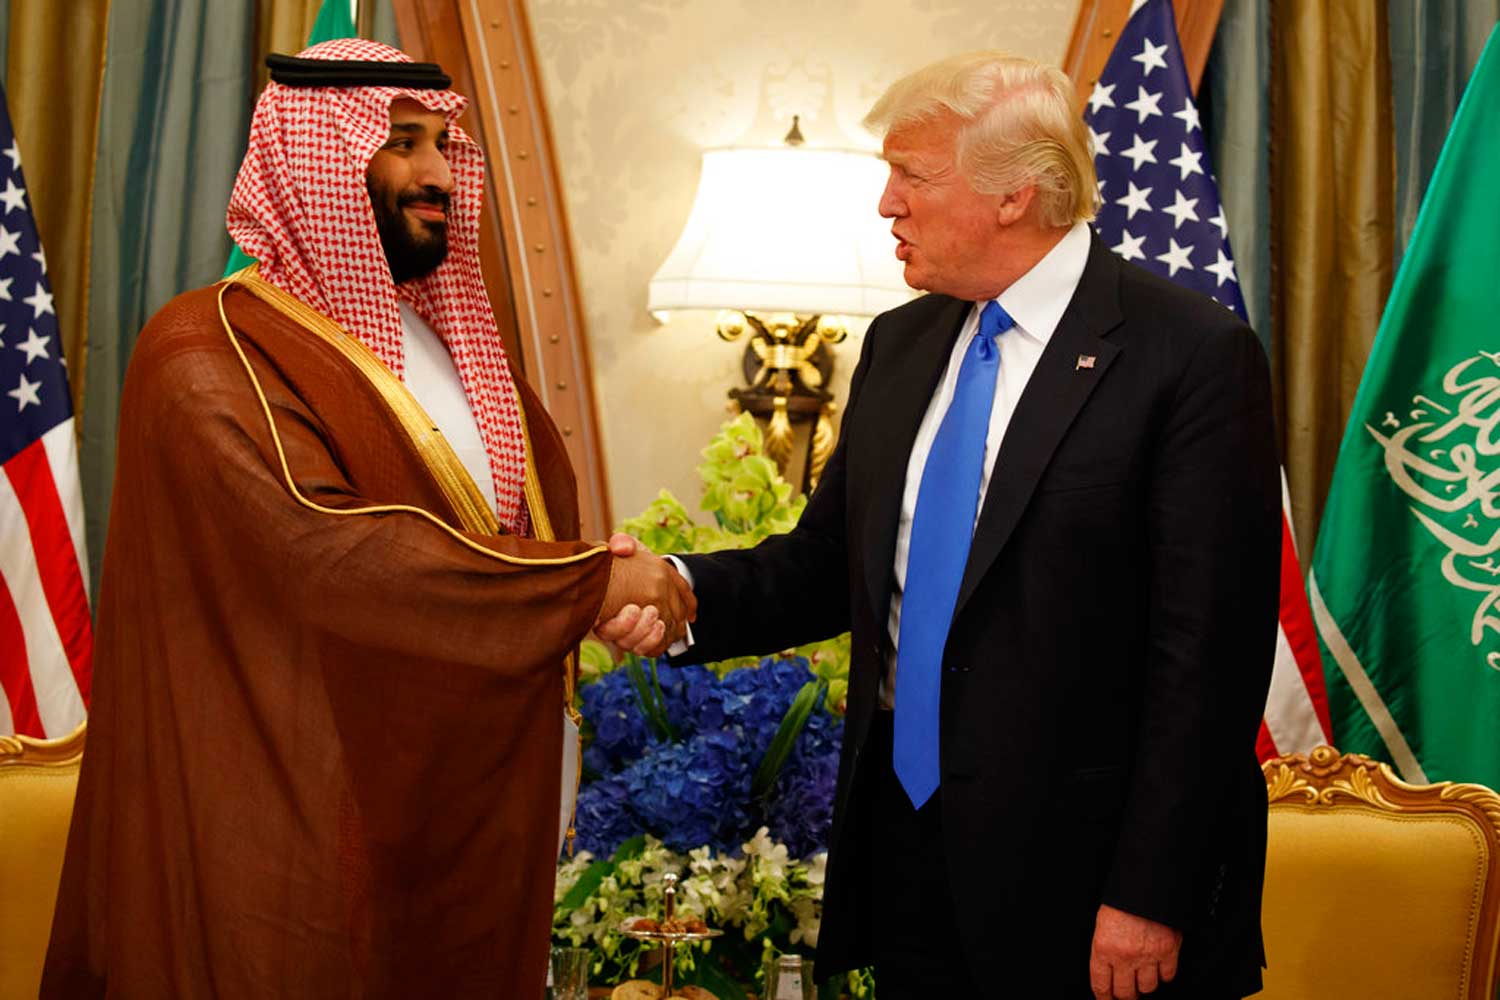 President Donald Trump shakes hands with Saudi Crown Prince Mohammed bin Salman, in Riyadh, Saudi Arabia on May 20, 2017.